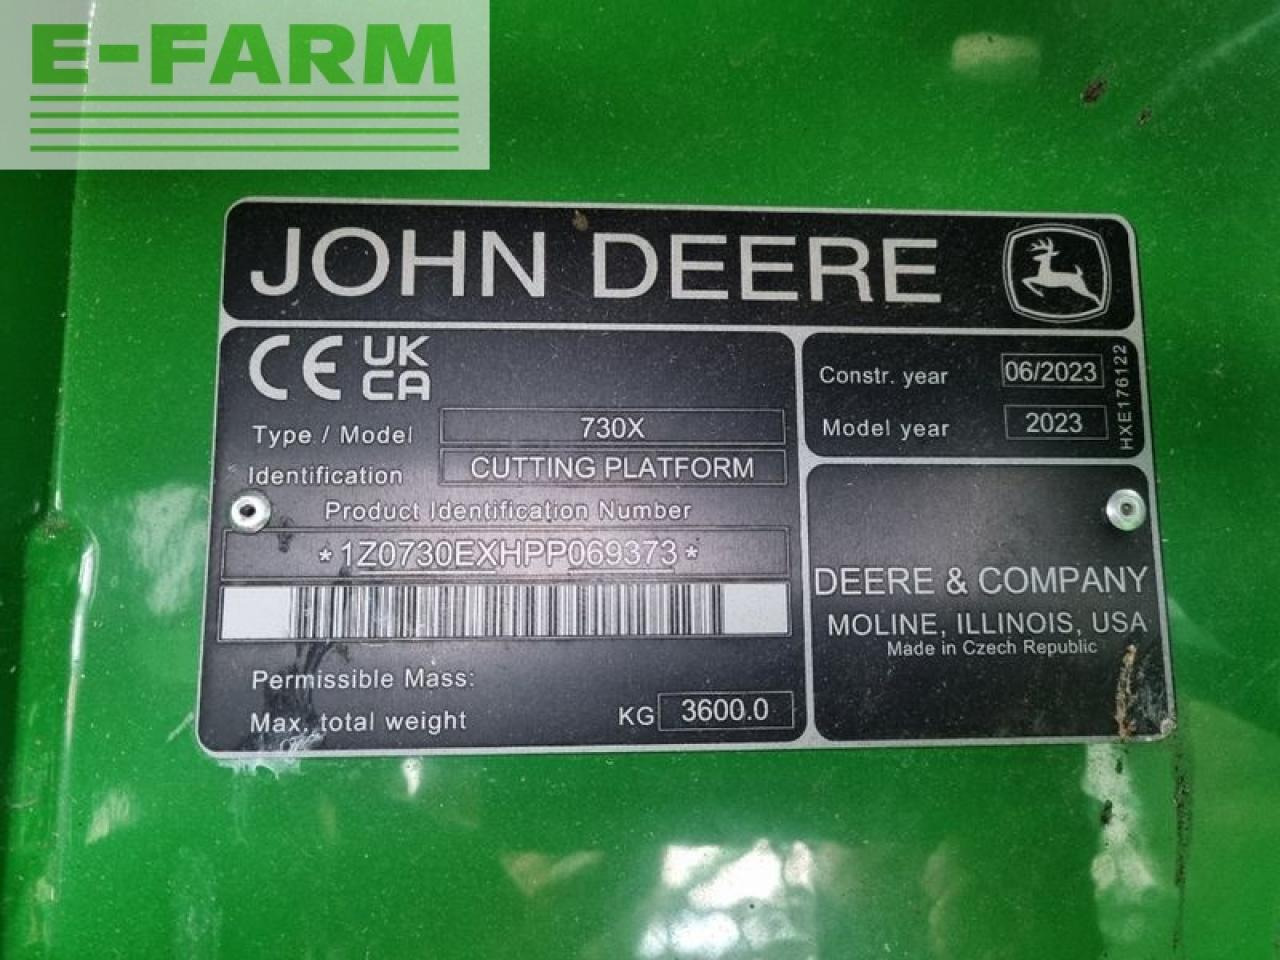 Cosechadora de granos John Deere s770 my23 prod 30: foto 22